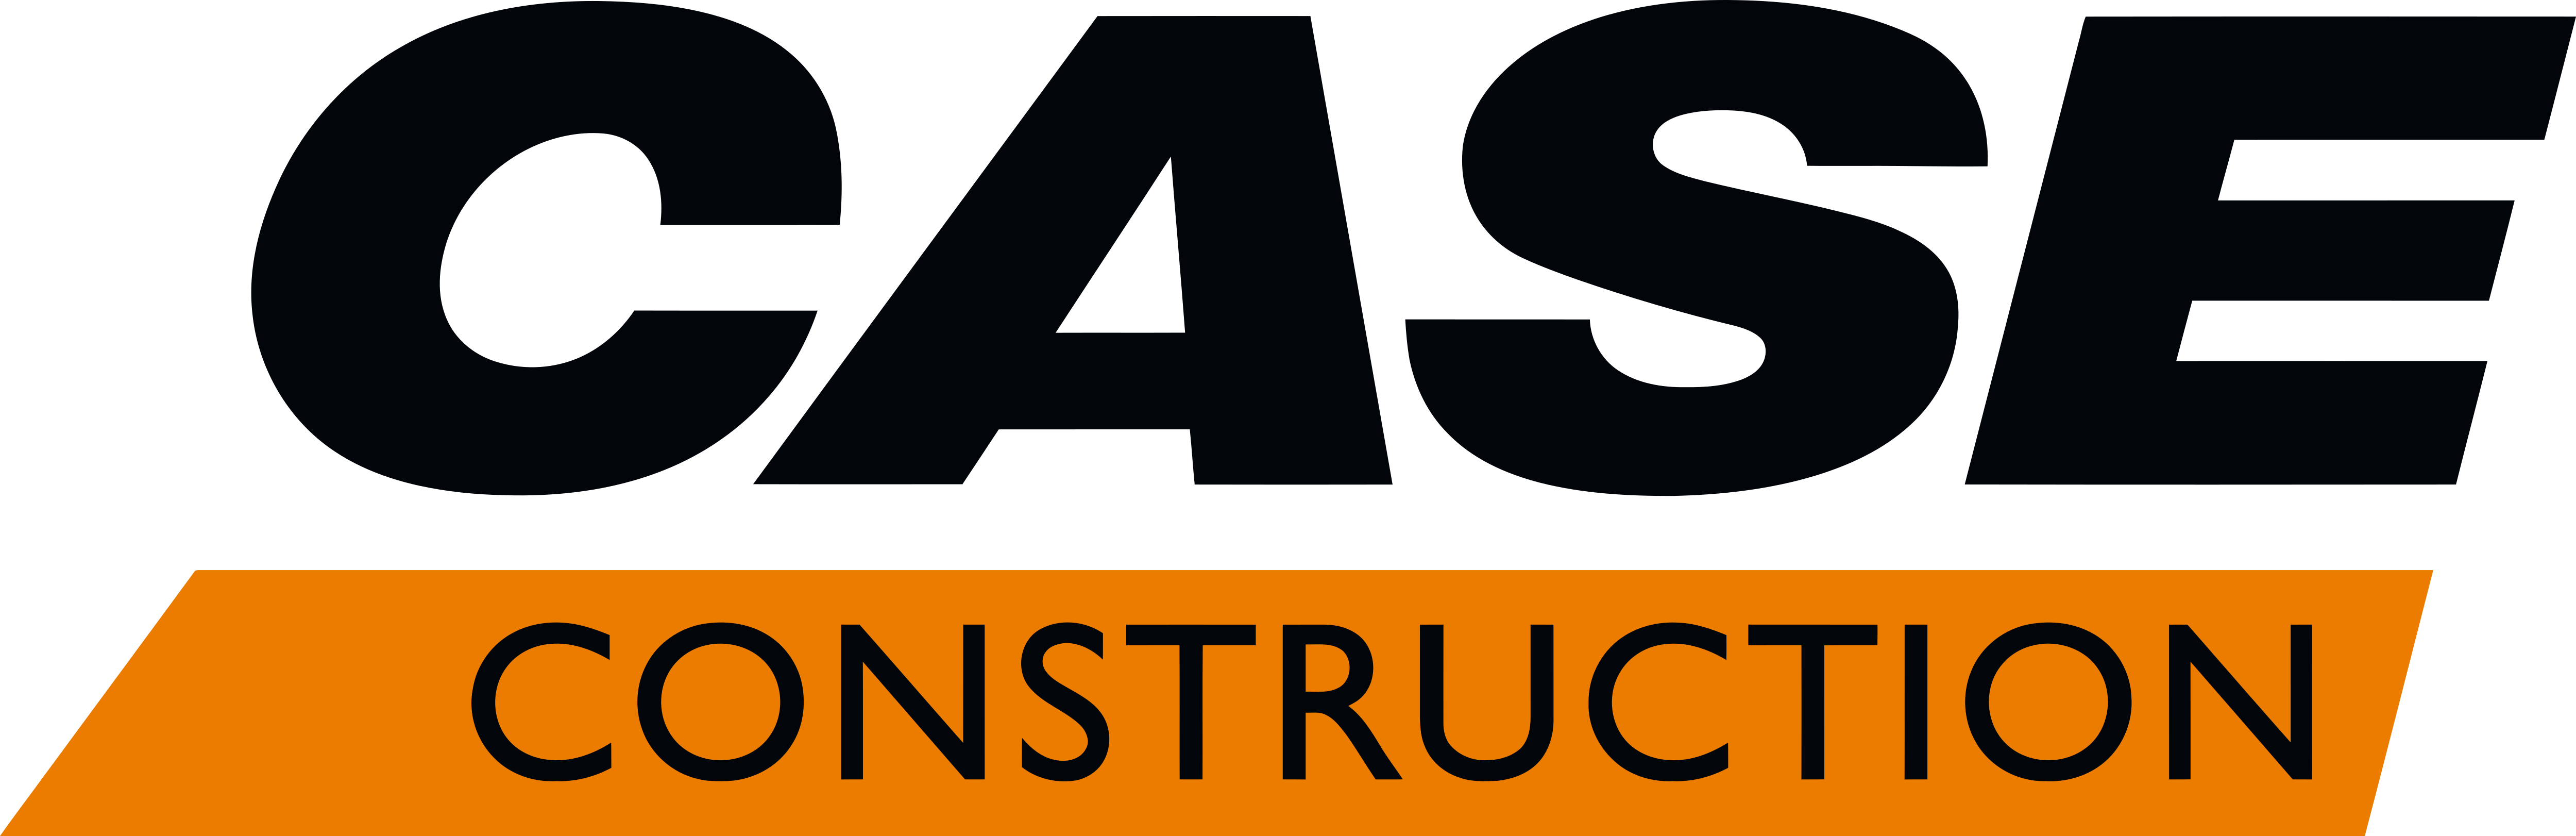 Construction Equipment Company Logos